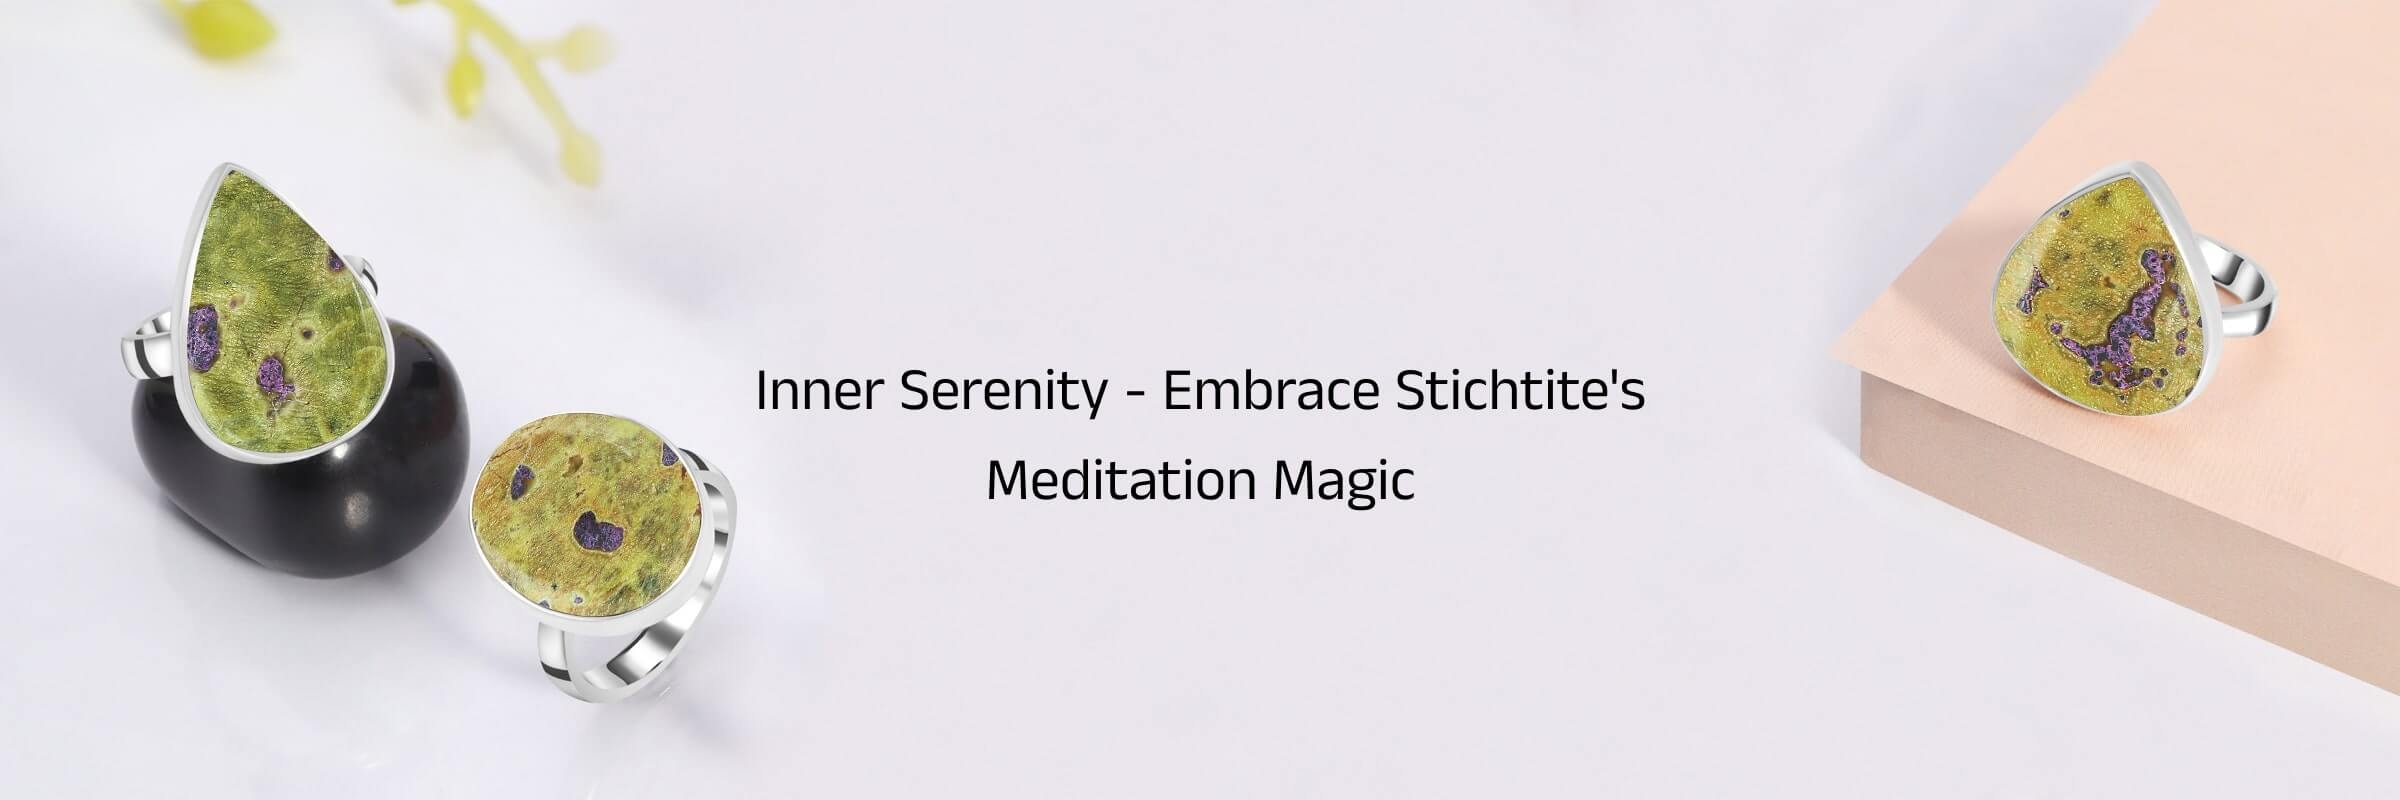 Meditation with Stichtite